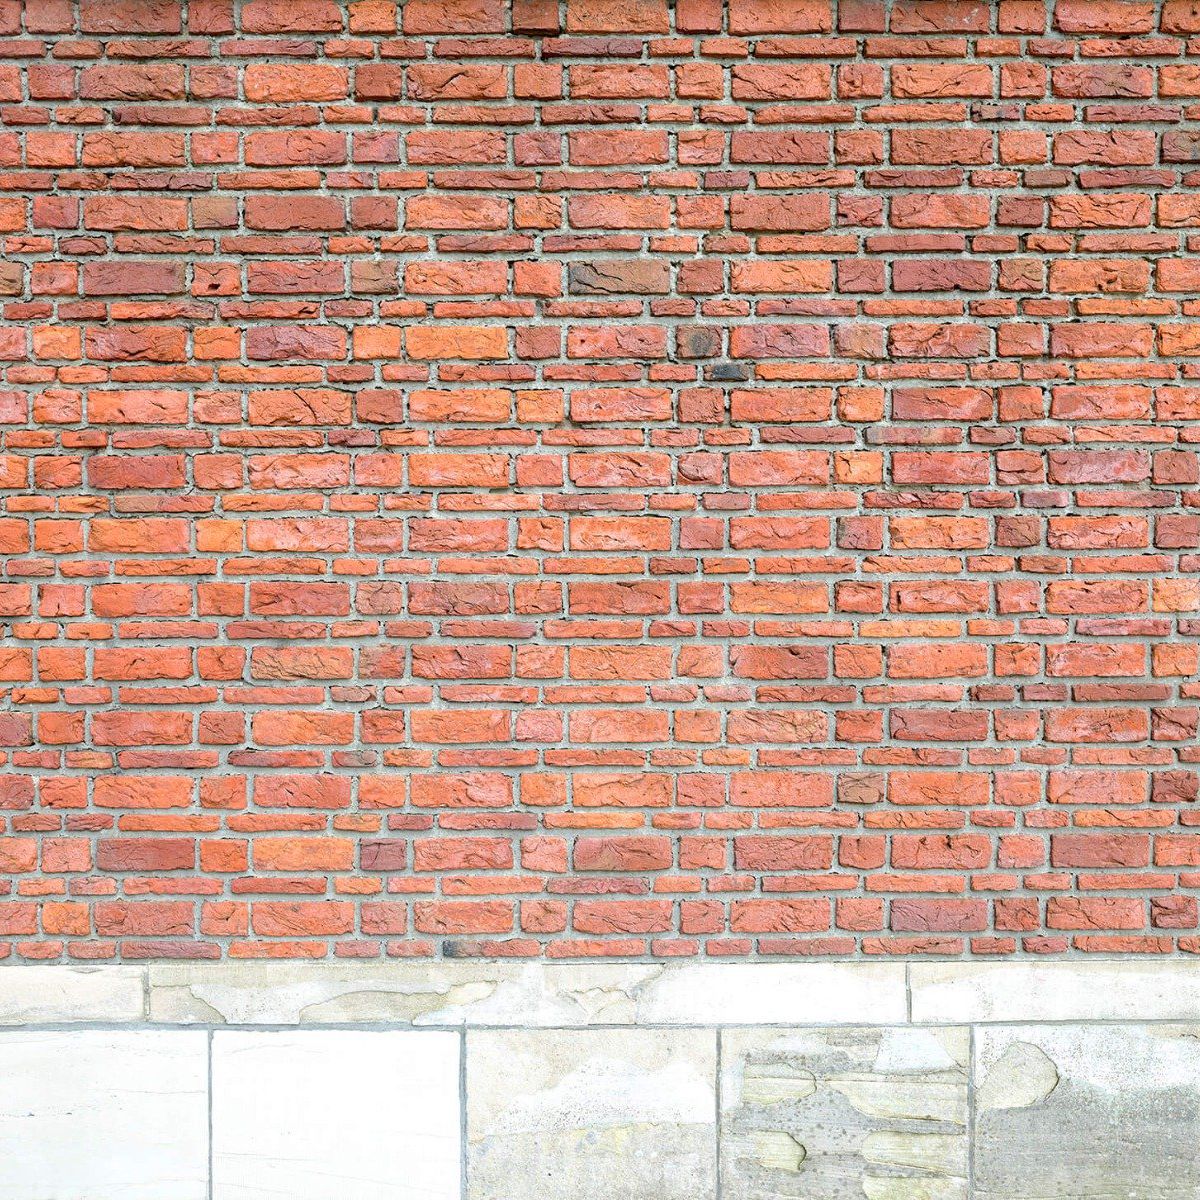 Bricks with old concrete